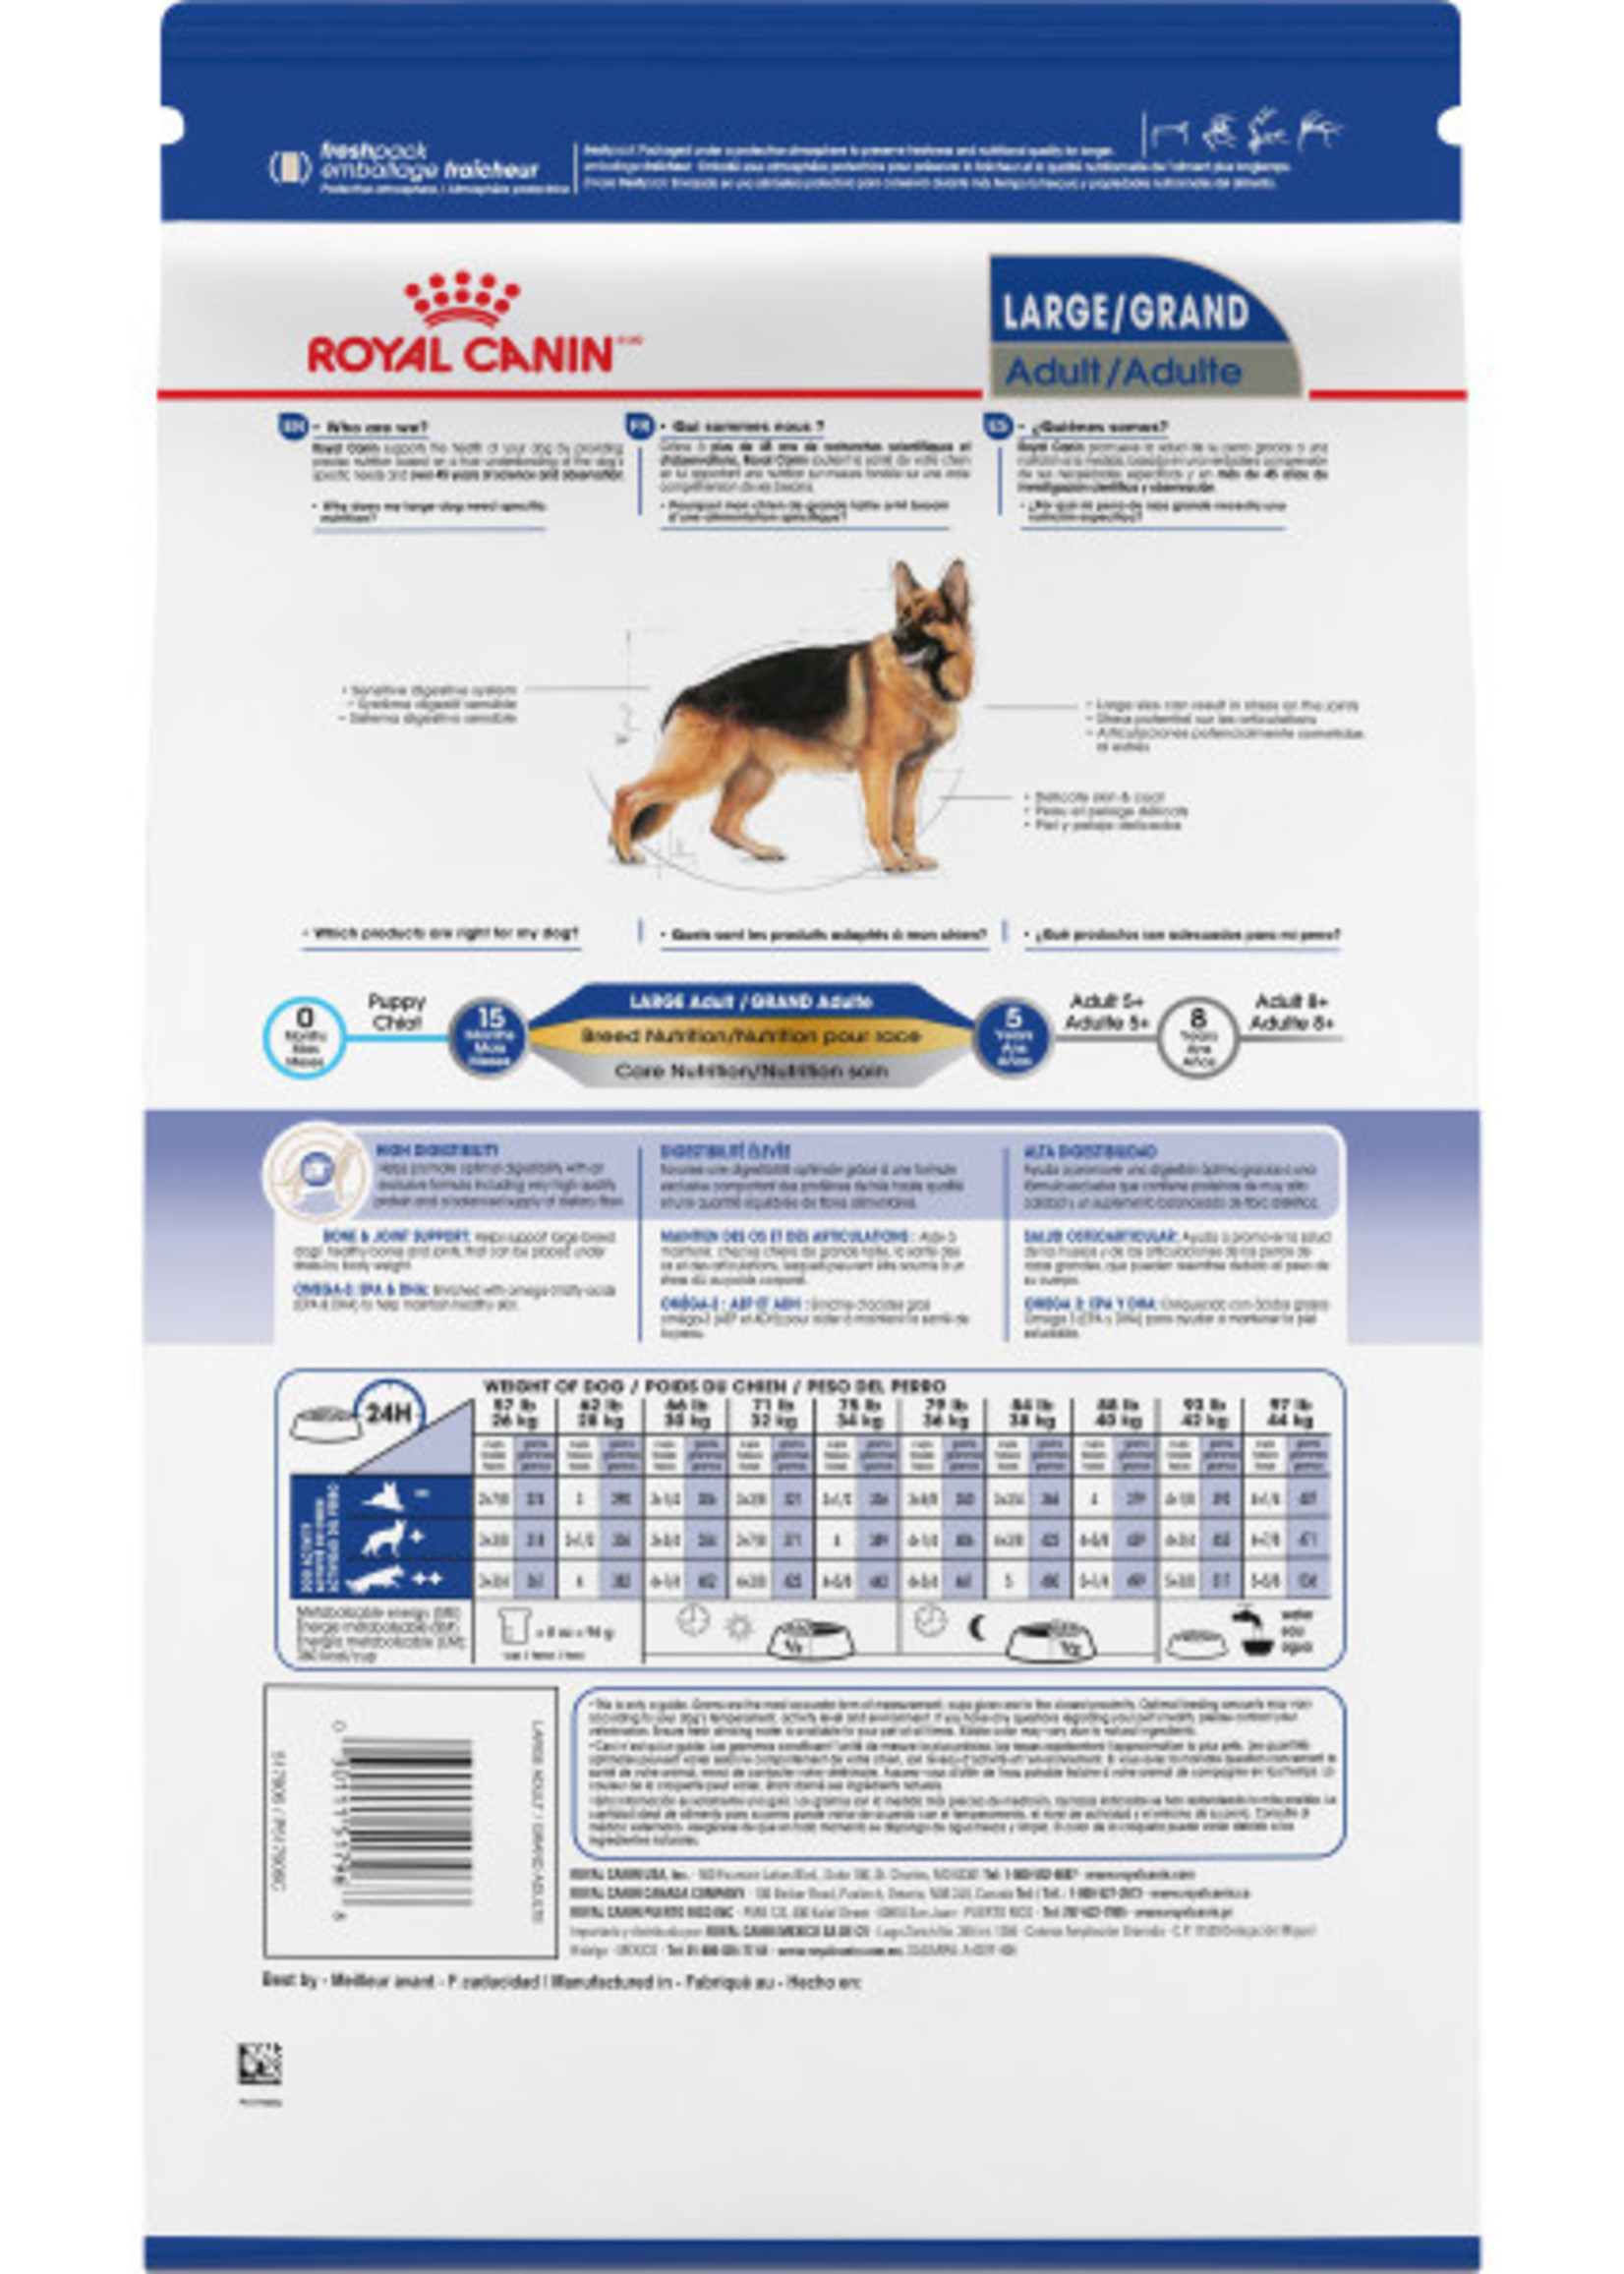 Royal Canin® Royal Canin Large Breed 35lbs